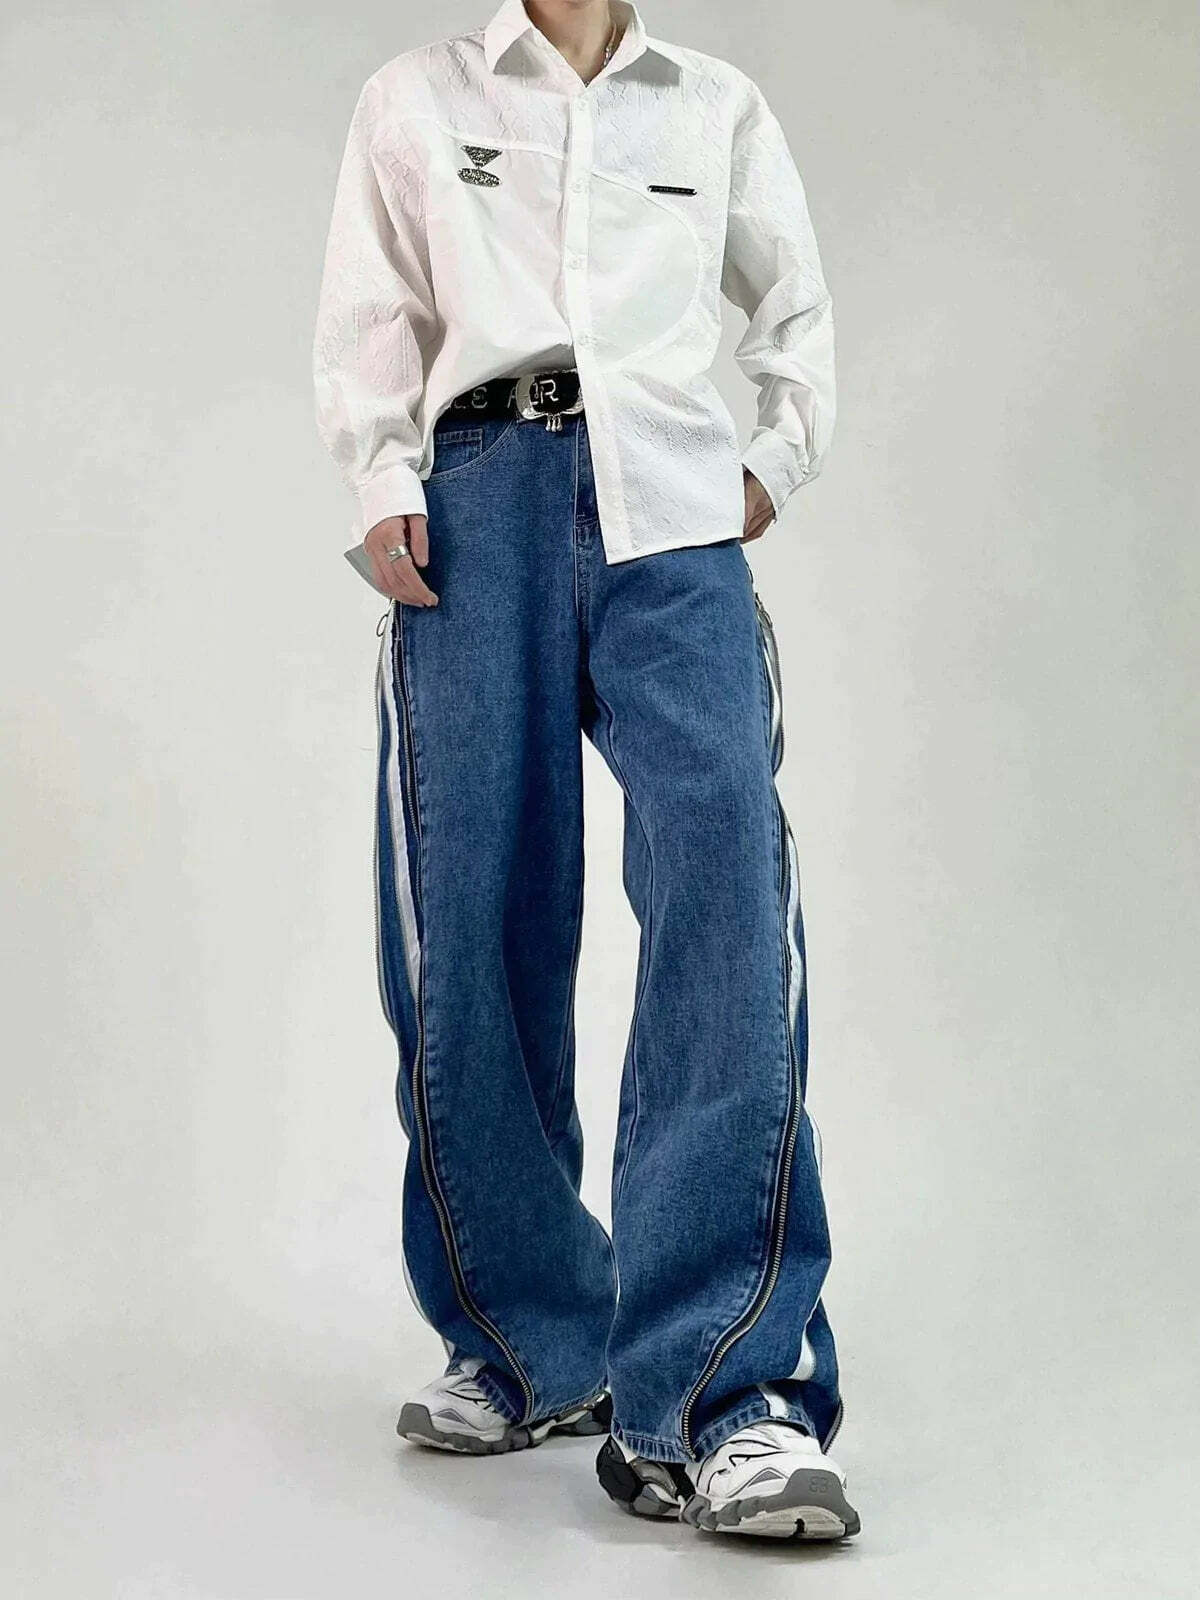 retro stripe zipup jeans edgy & vibrant streetwear 7687